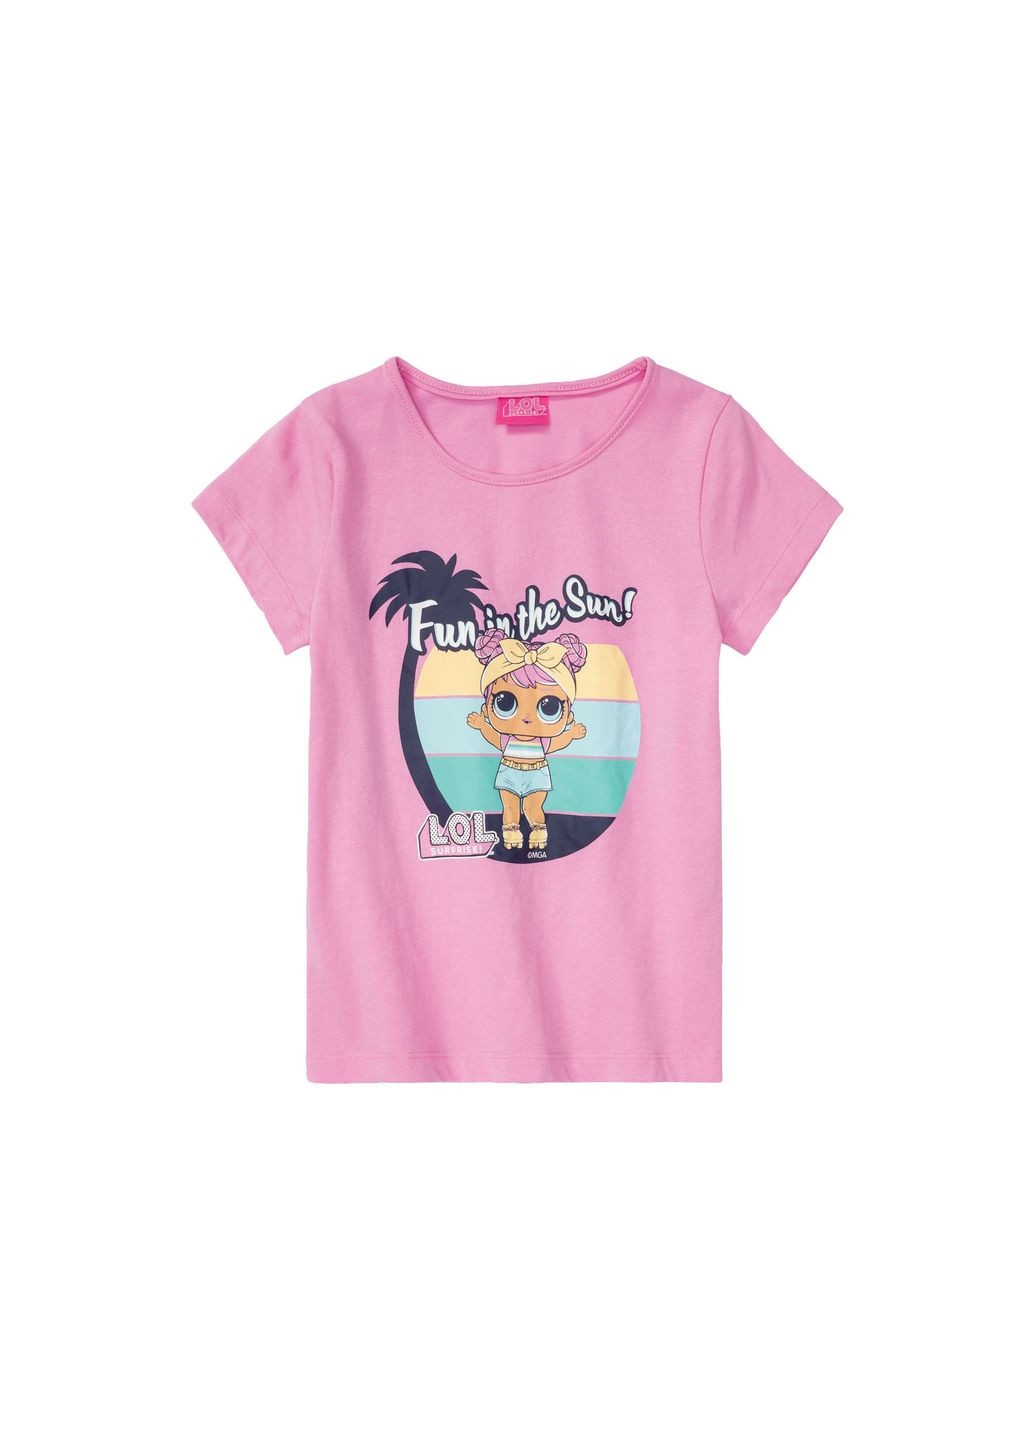 Розовая пижама (футболка и шорты) для девочки l.o.l. 371167 Disney